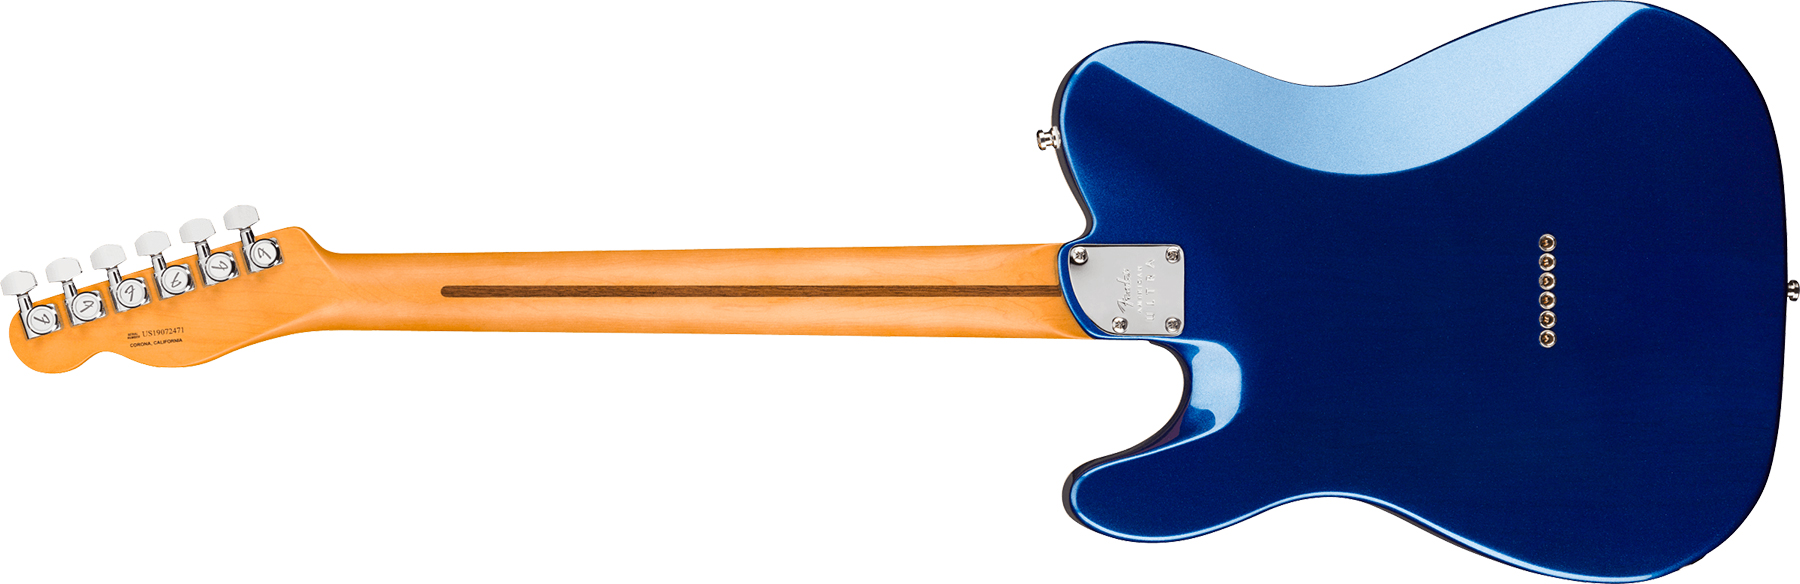 Fender Tele American Ultra 2019 Usa Mn - Cobra Blue - E-Gitarre in Teleform - Variation 1